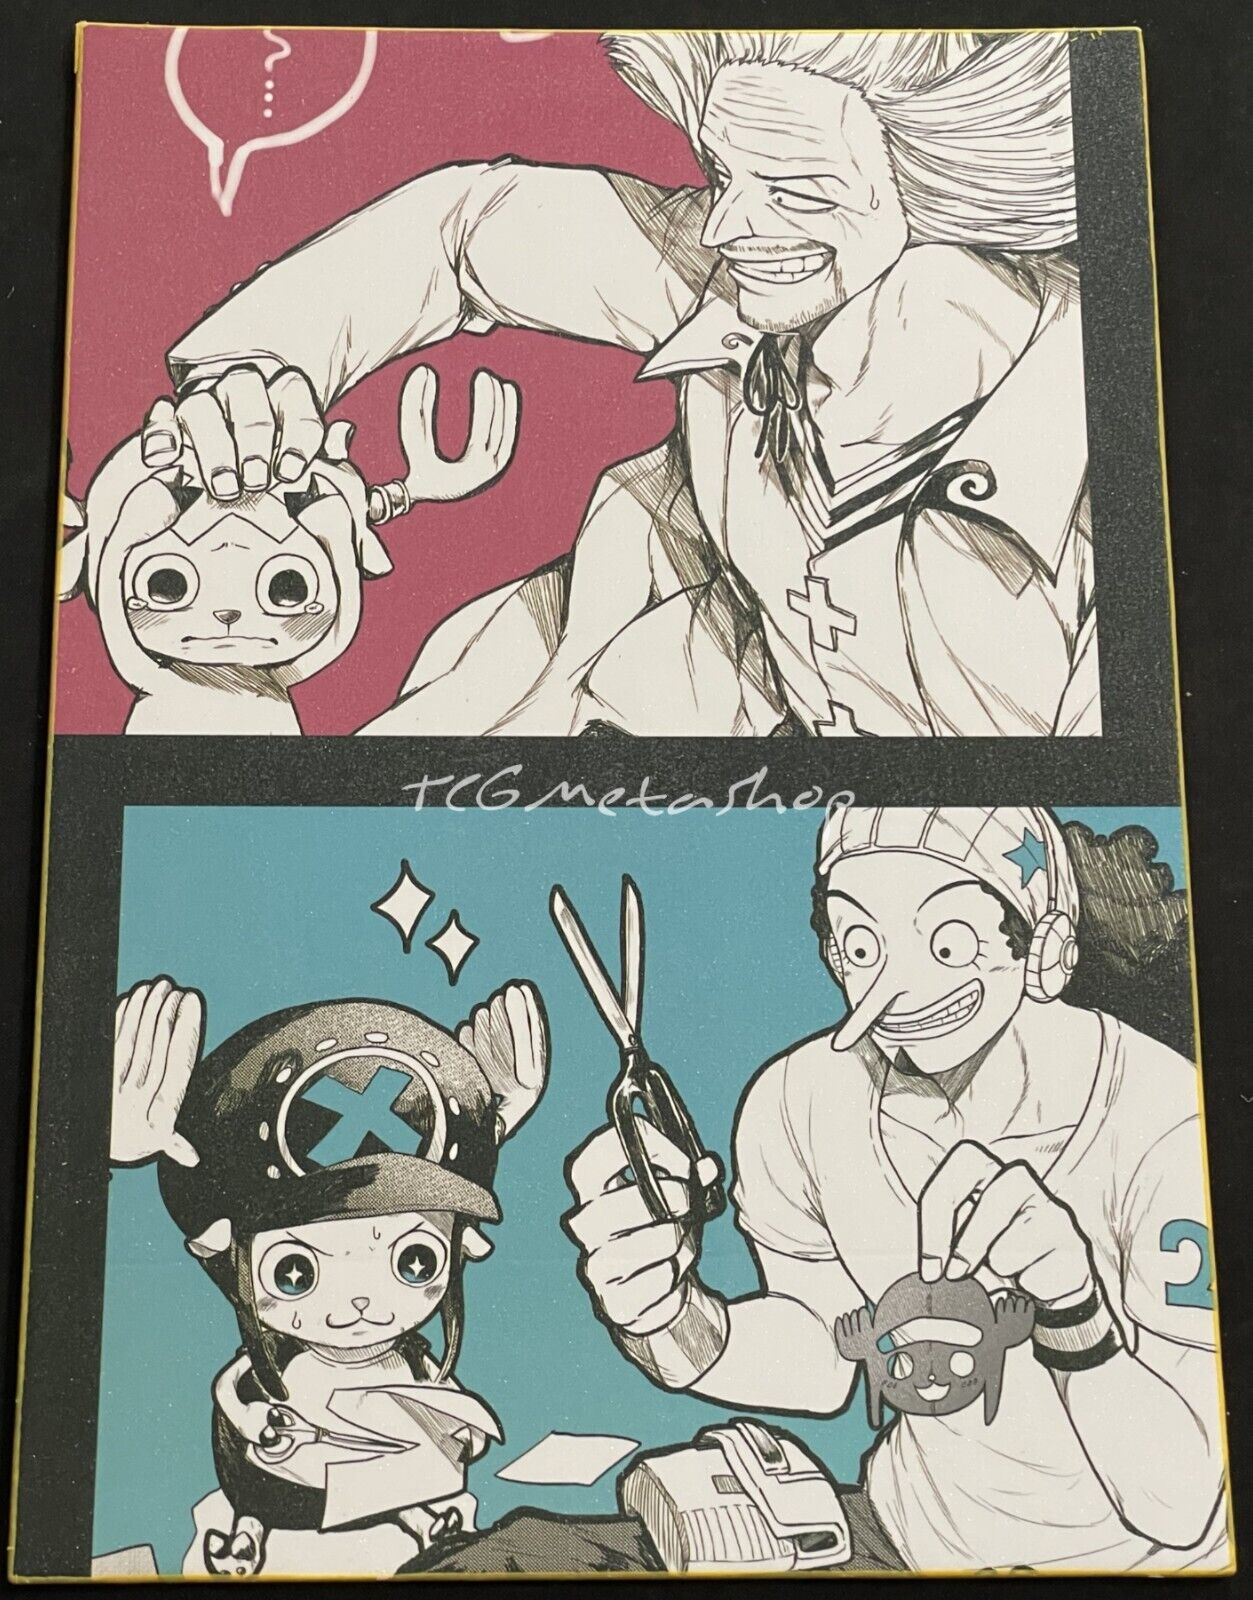 🔥 Tony Chopper One Piece Goddess Story Anime Waifu A4 Card SP 7 🔥